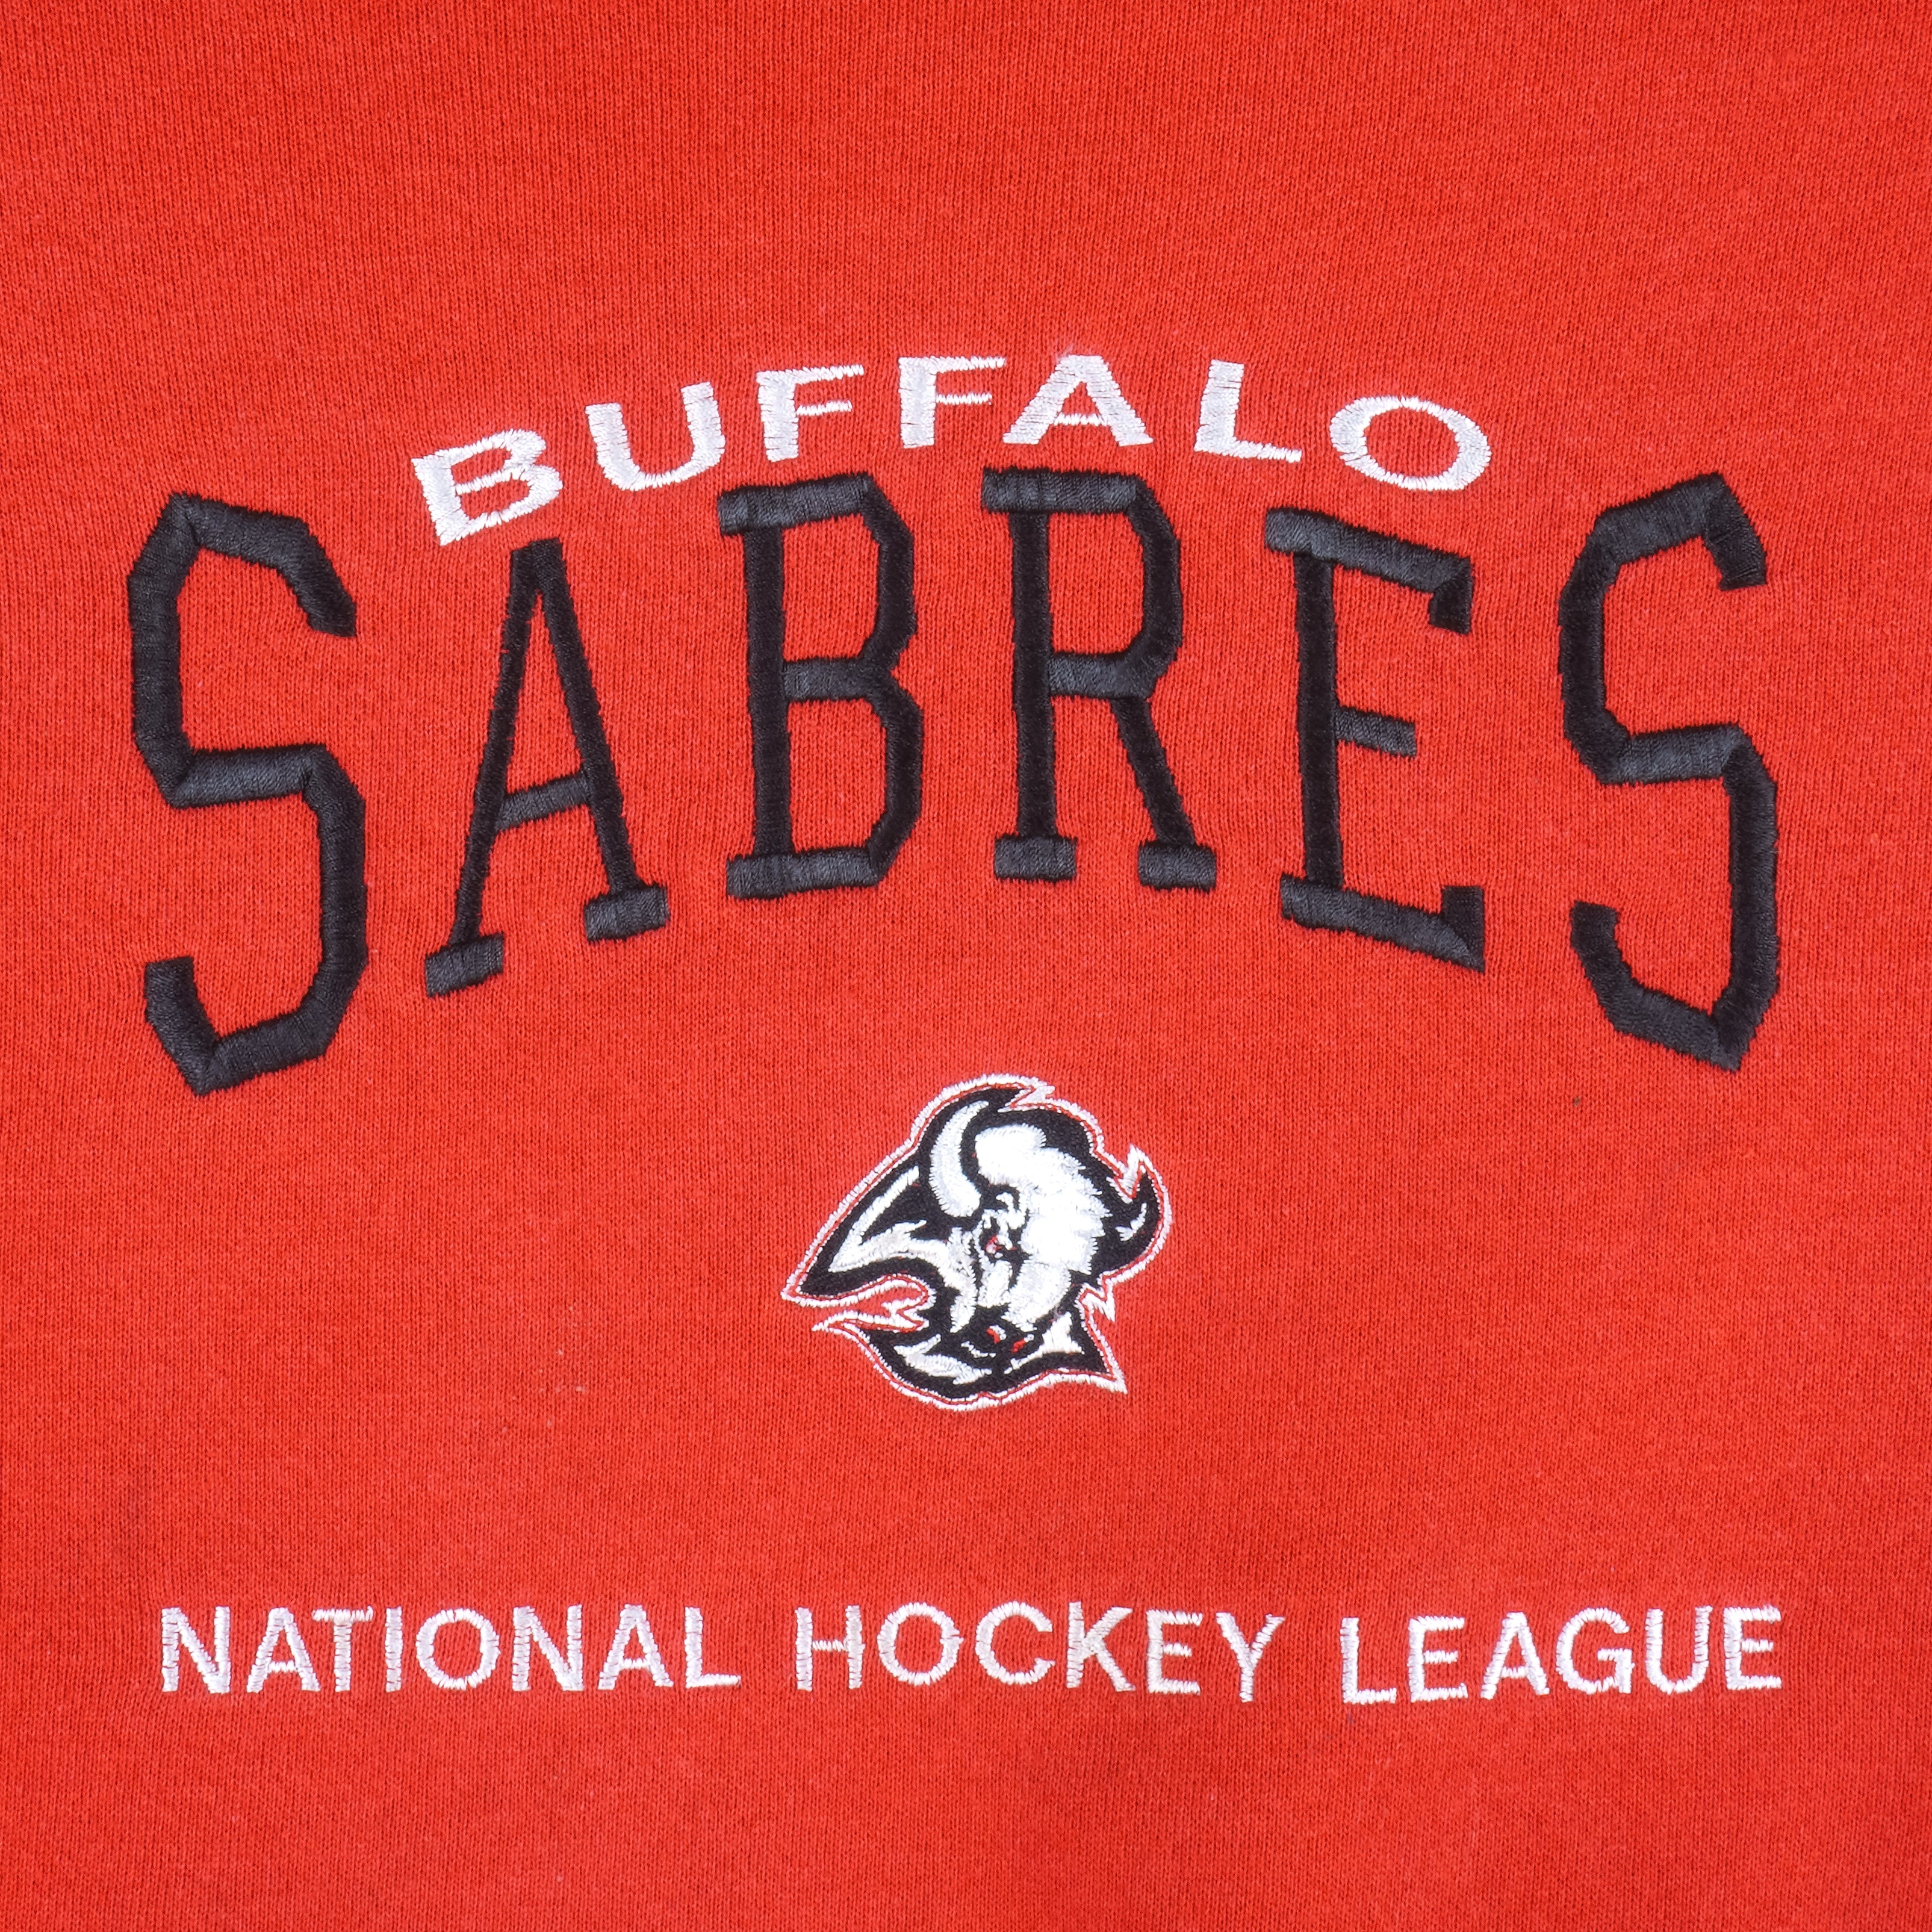 Vintage Buffalo Sabres Crewneck Sweatshirt Mens Large NHL Hockey Lee Sports